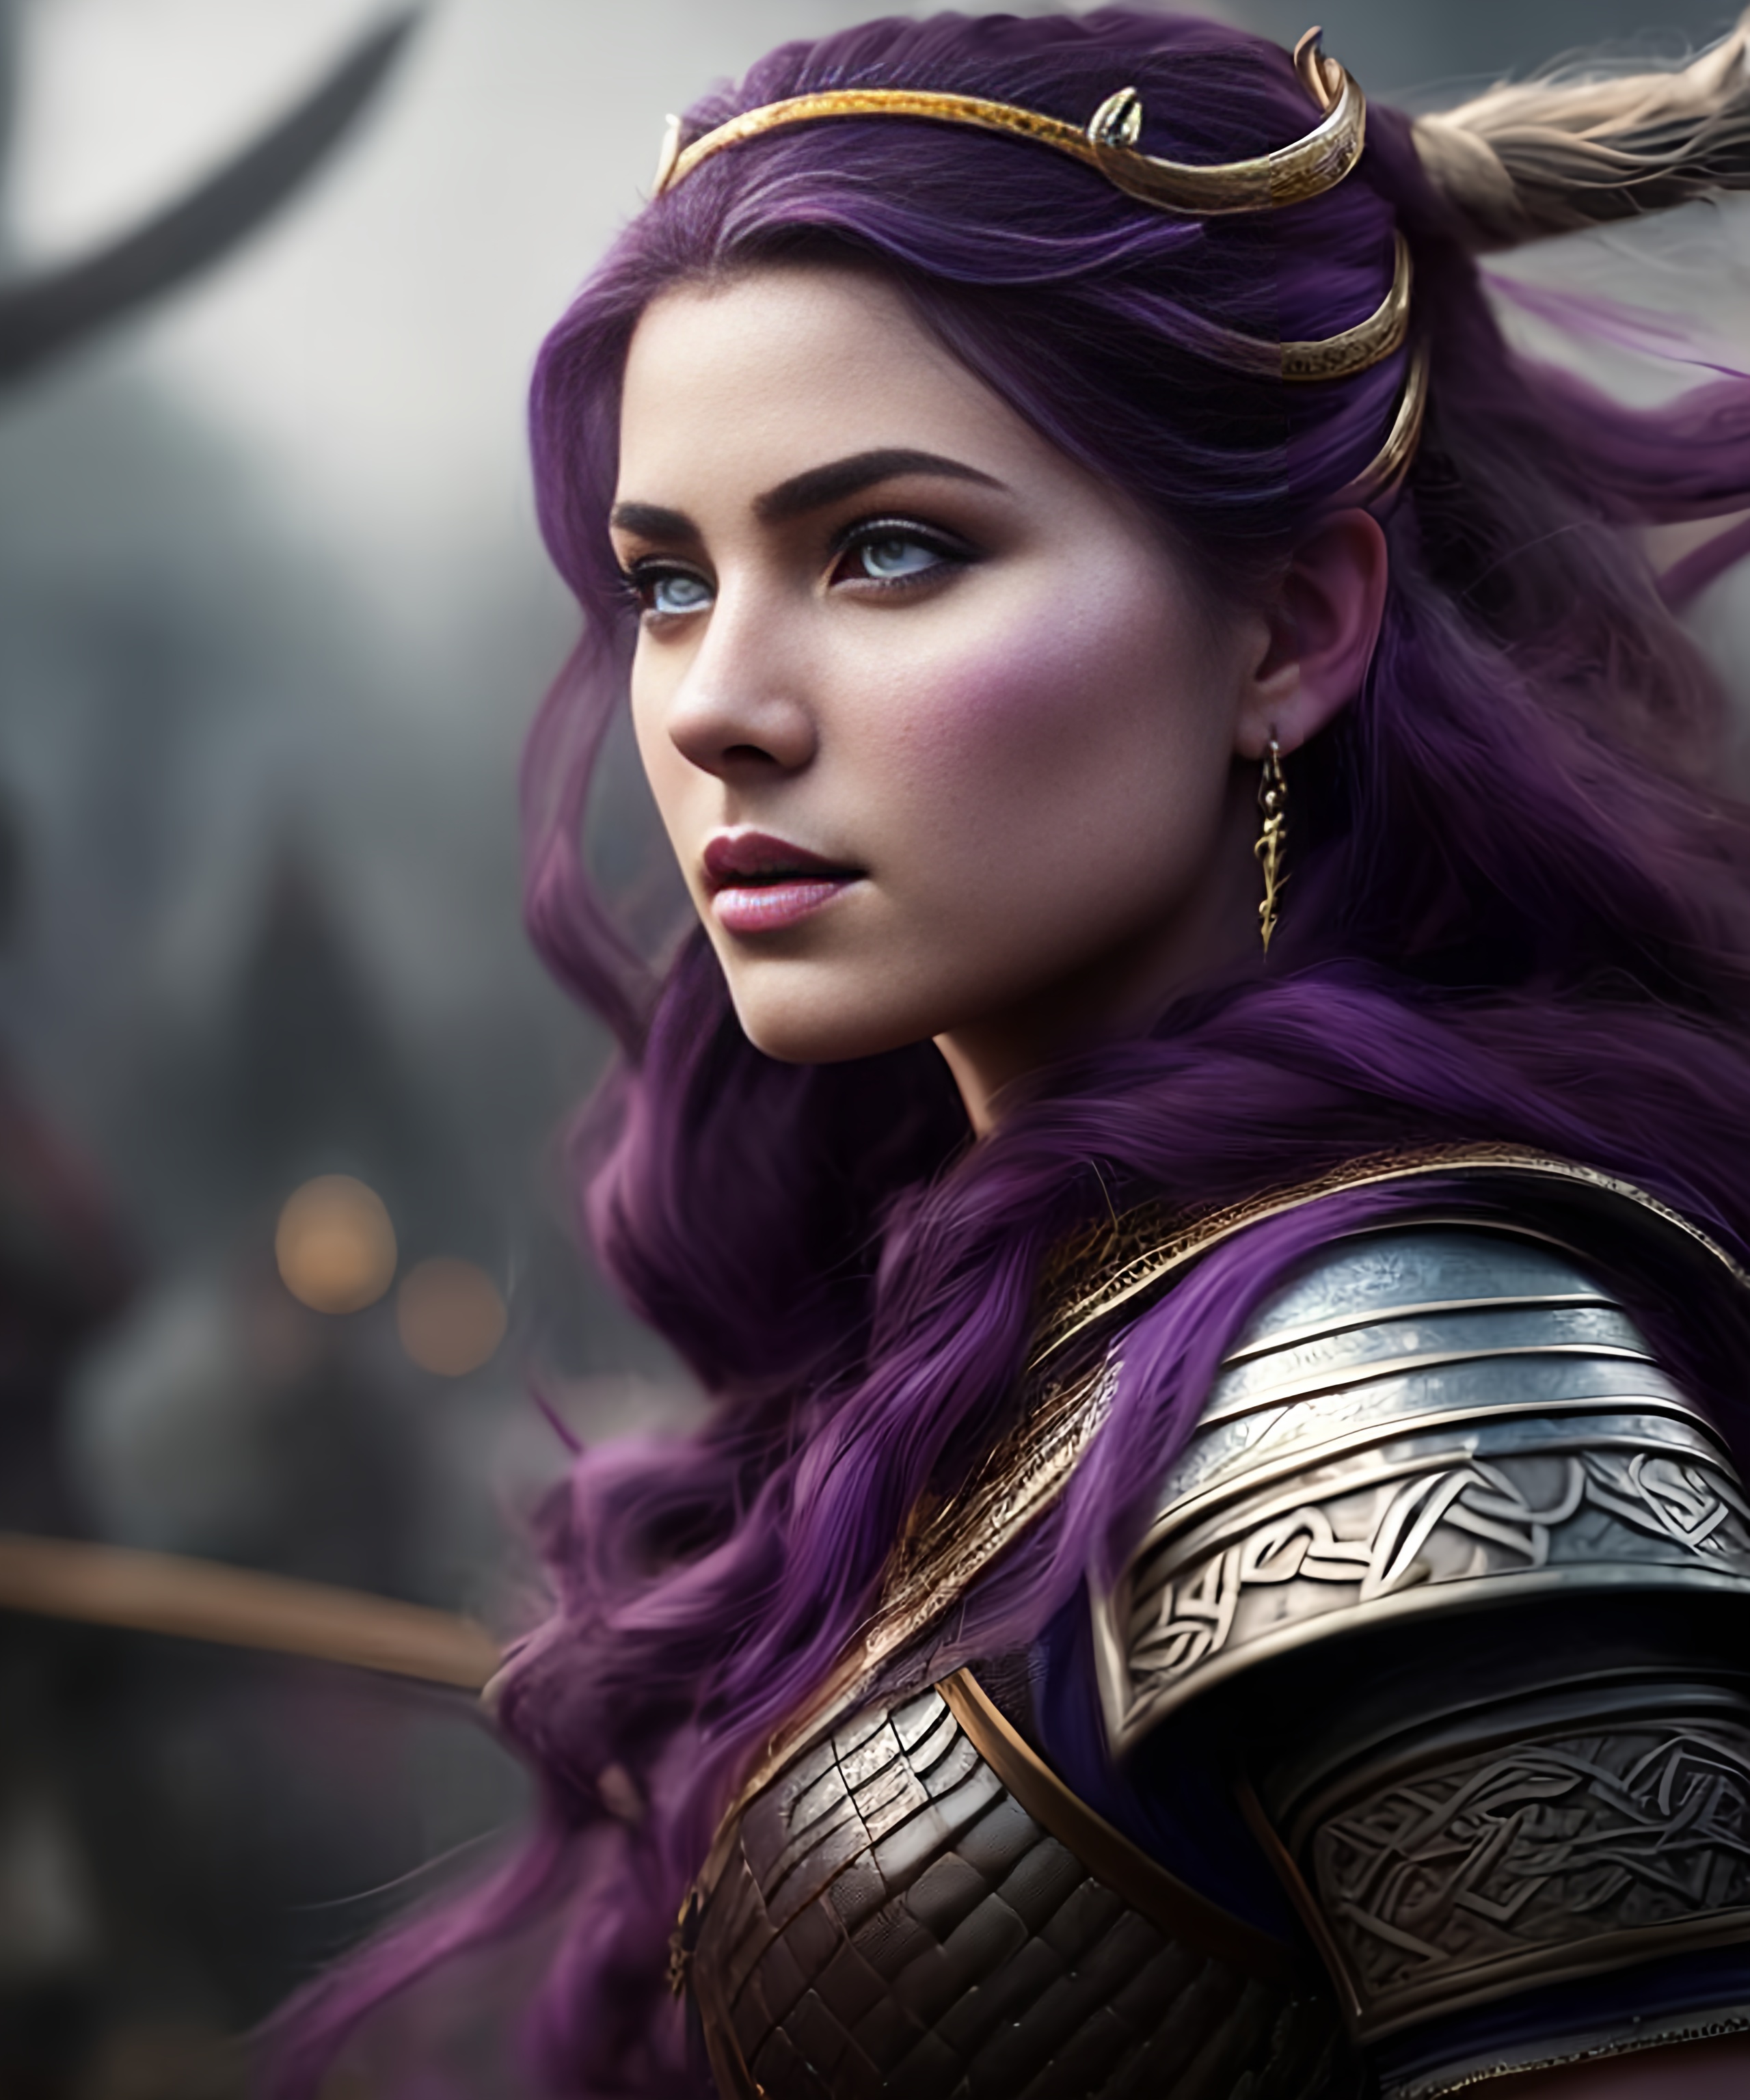 create most beautiful fictional female viking prince...